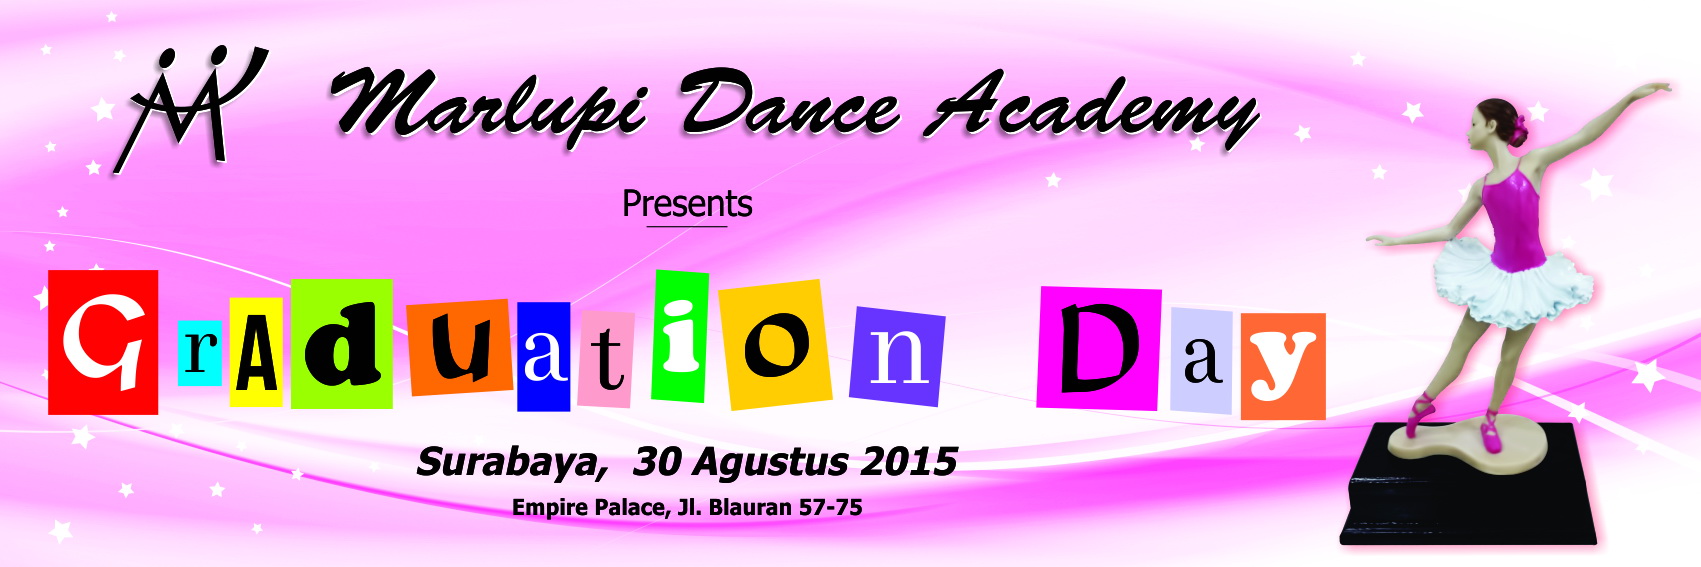 Marlupi Dance Academy Graduation Day 30 Agustus 2015